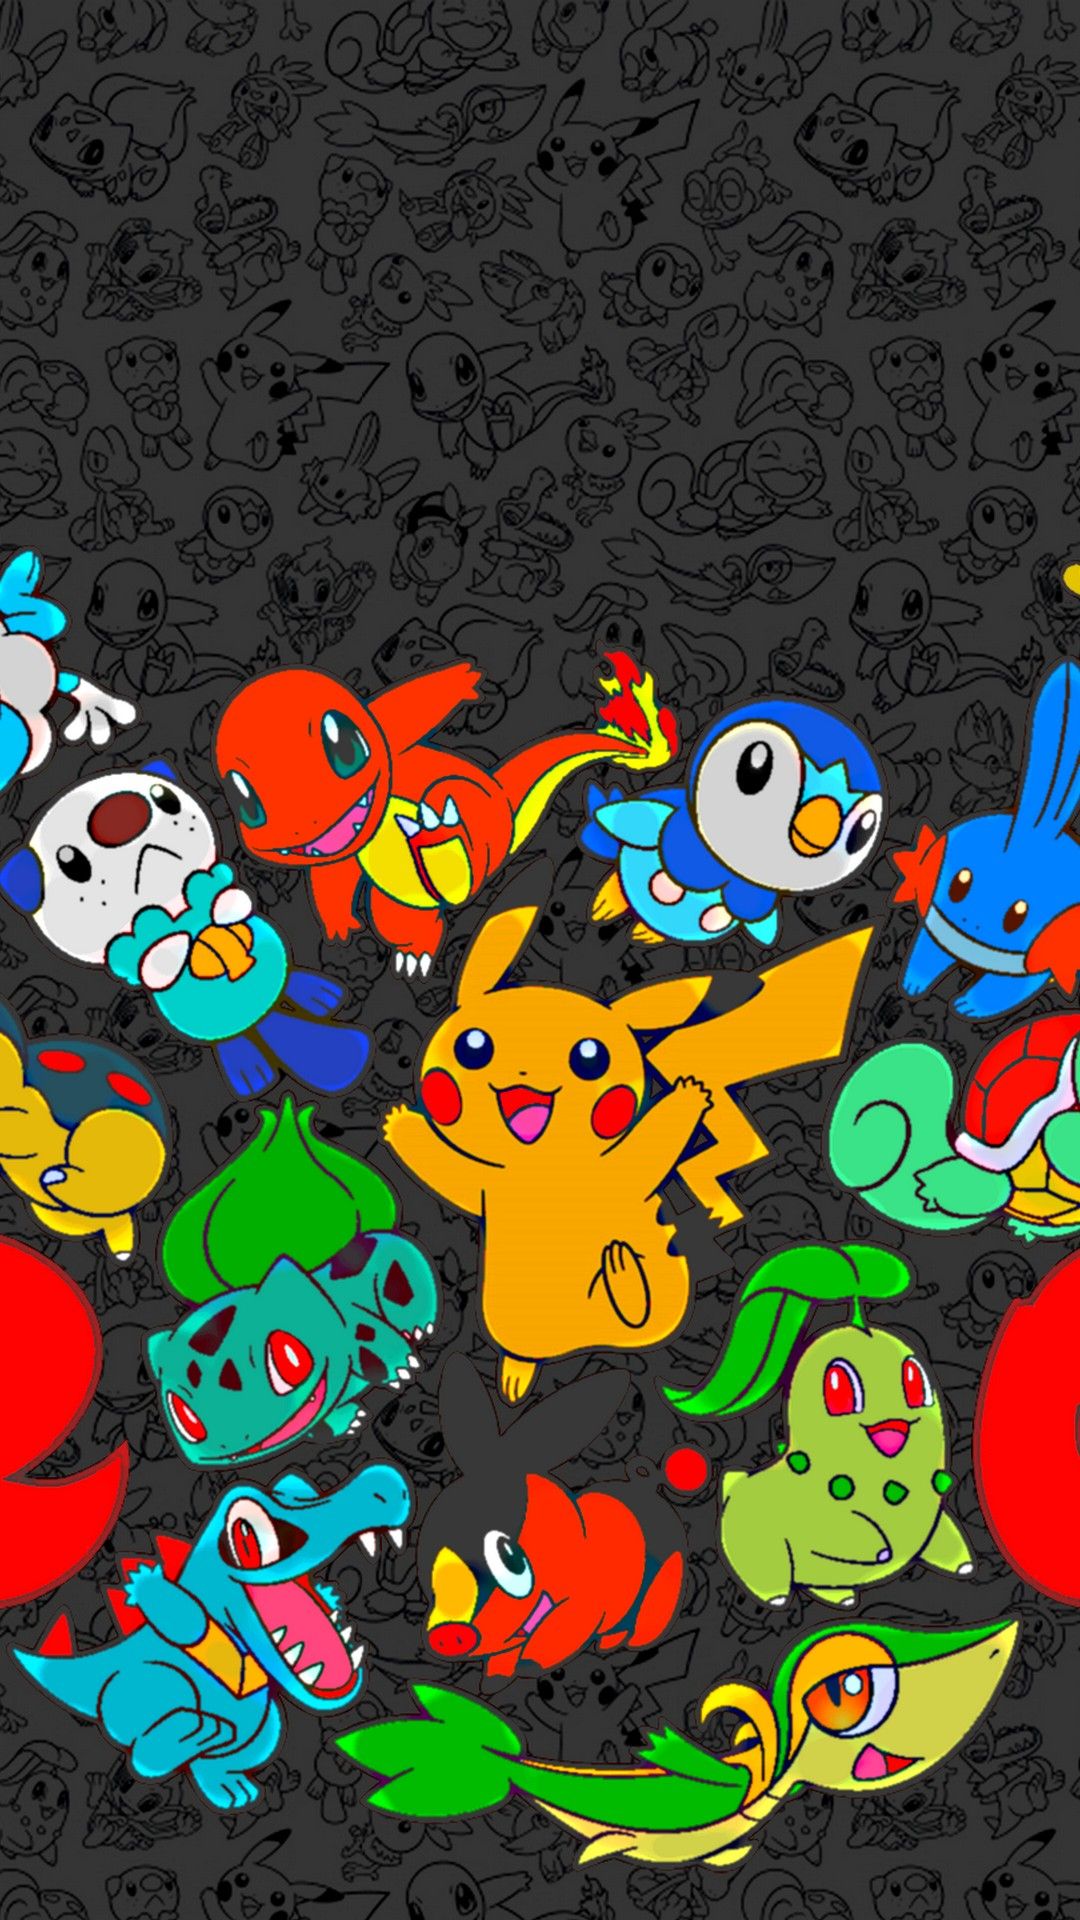 Zendha: Cool Pokemon Wallpaper For Phone